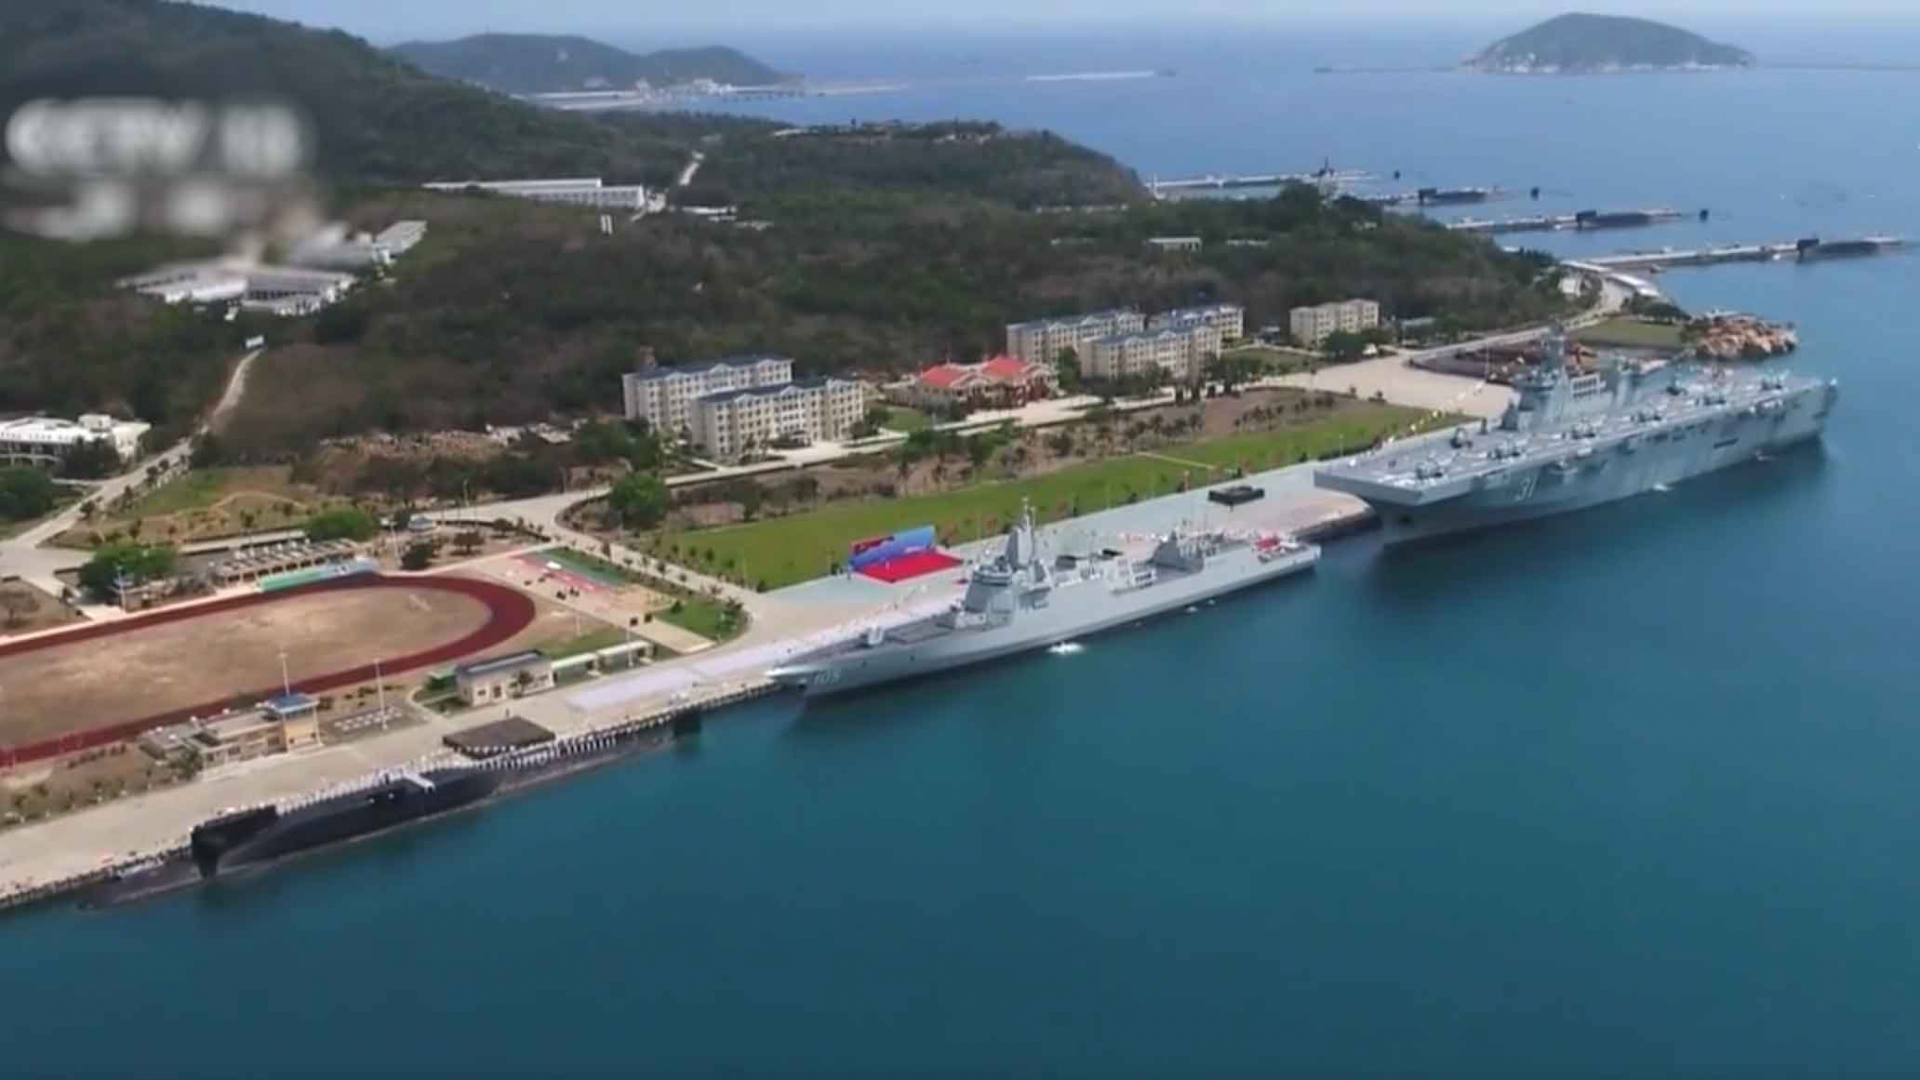 Warships on display at a naval port in Hainan Province, China, April 23, 2021. /Screenshot from CMG